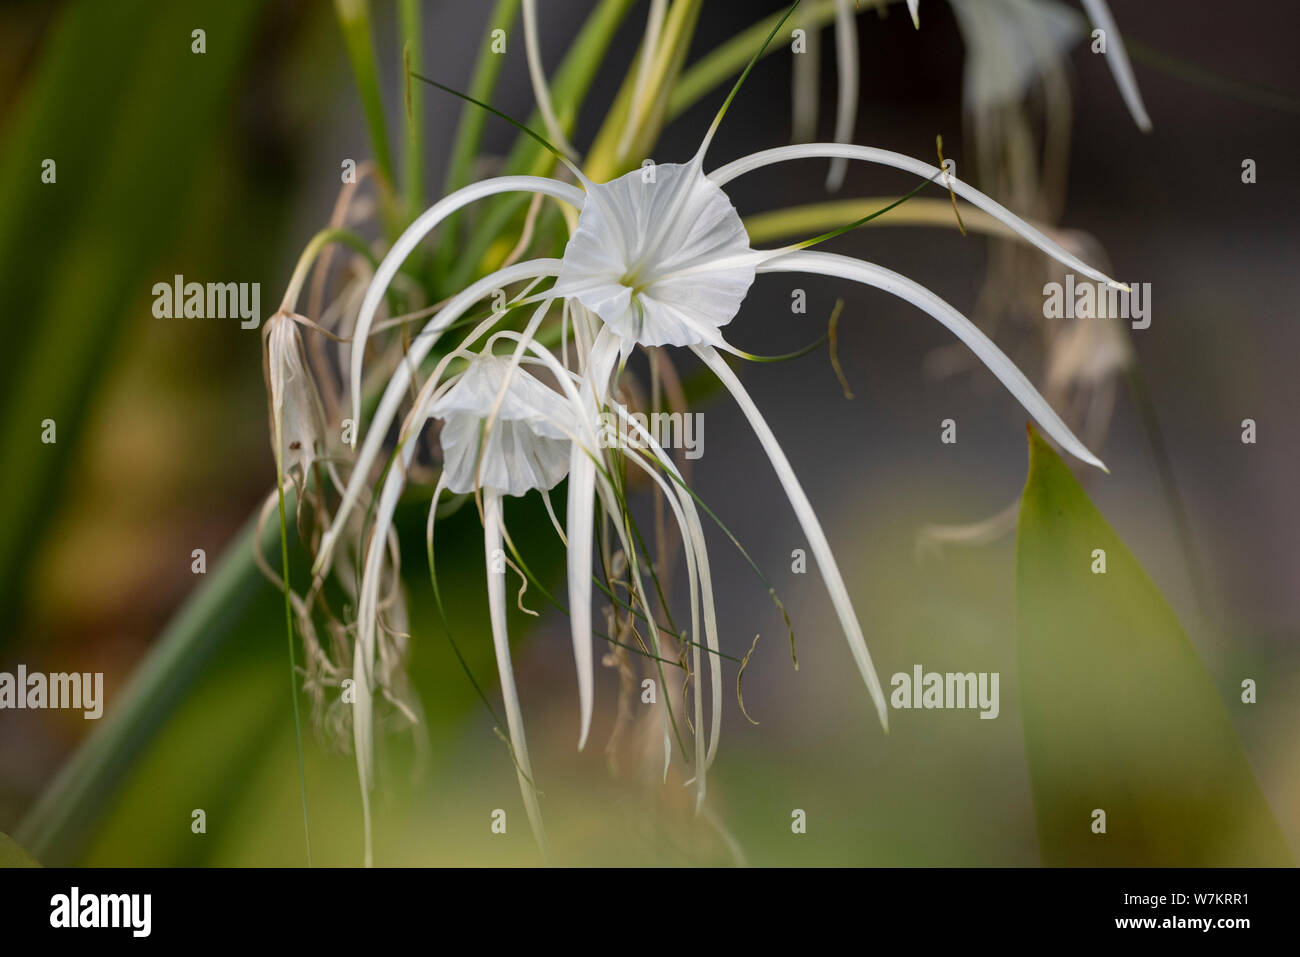 Flower Gimenokallis (Lat. Hymenocallis) close-up in natural light. Thailand. Stock Photo